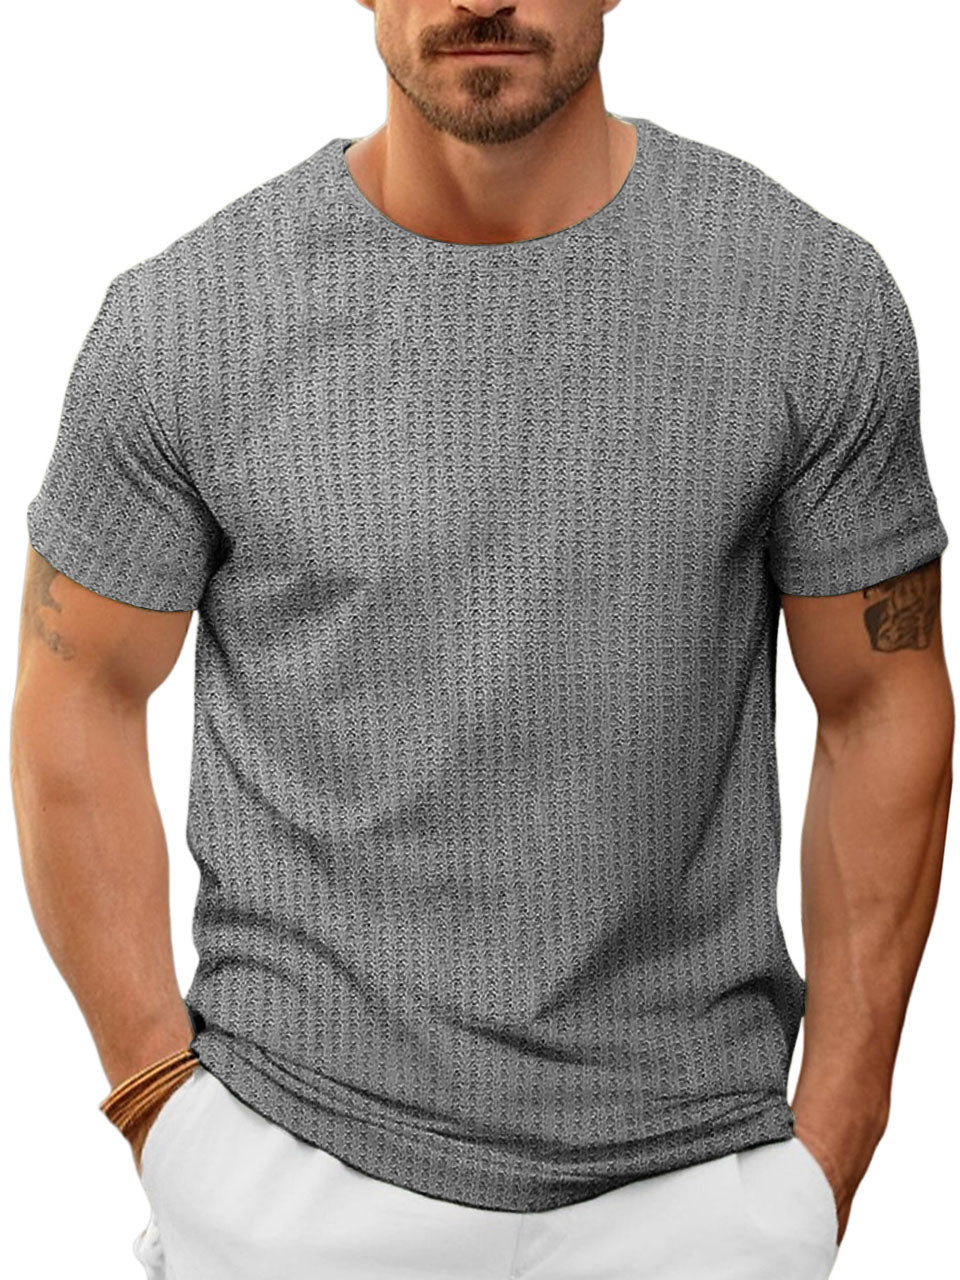 Men's Casual Basic Round Neck Short Sleeve T-Shirt